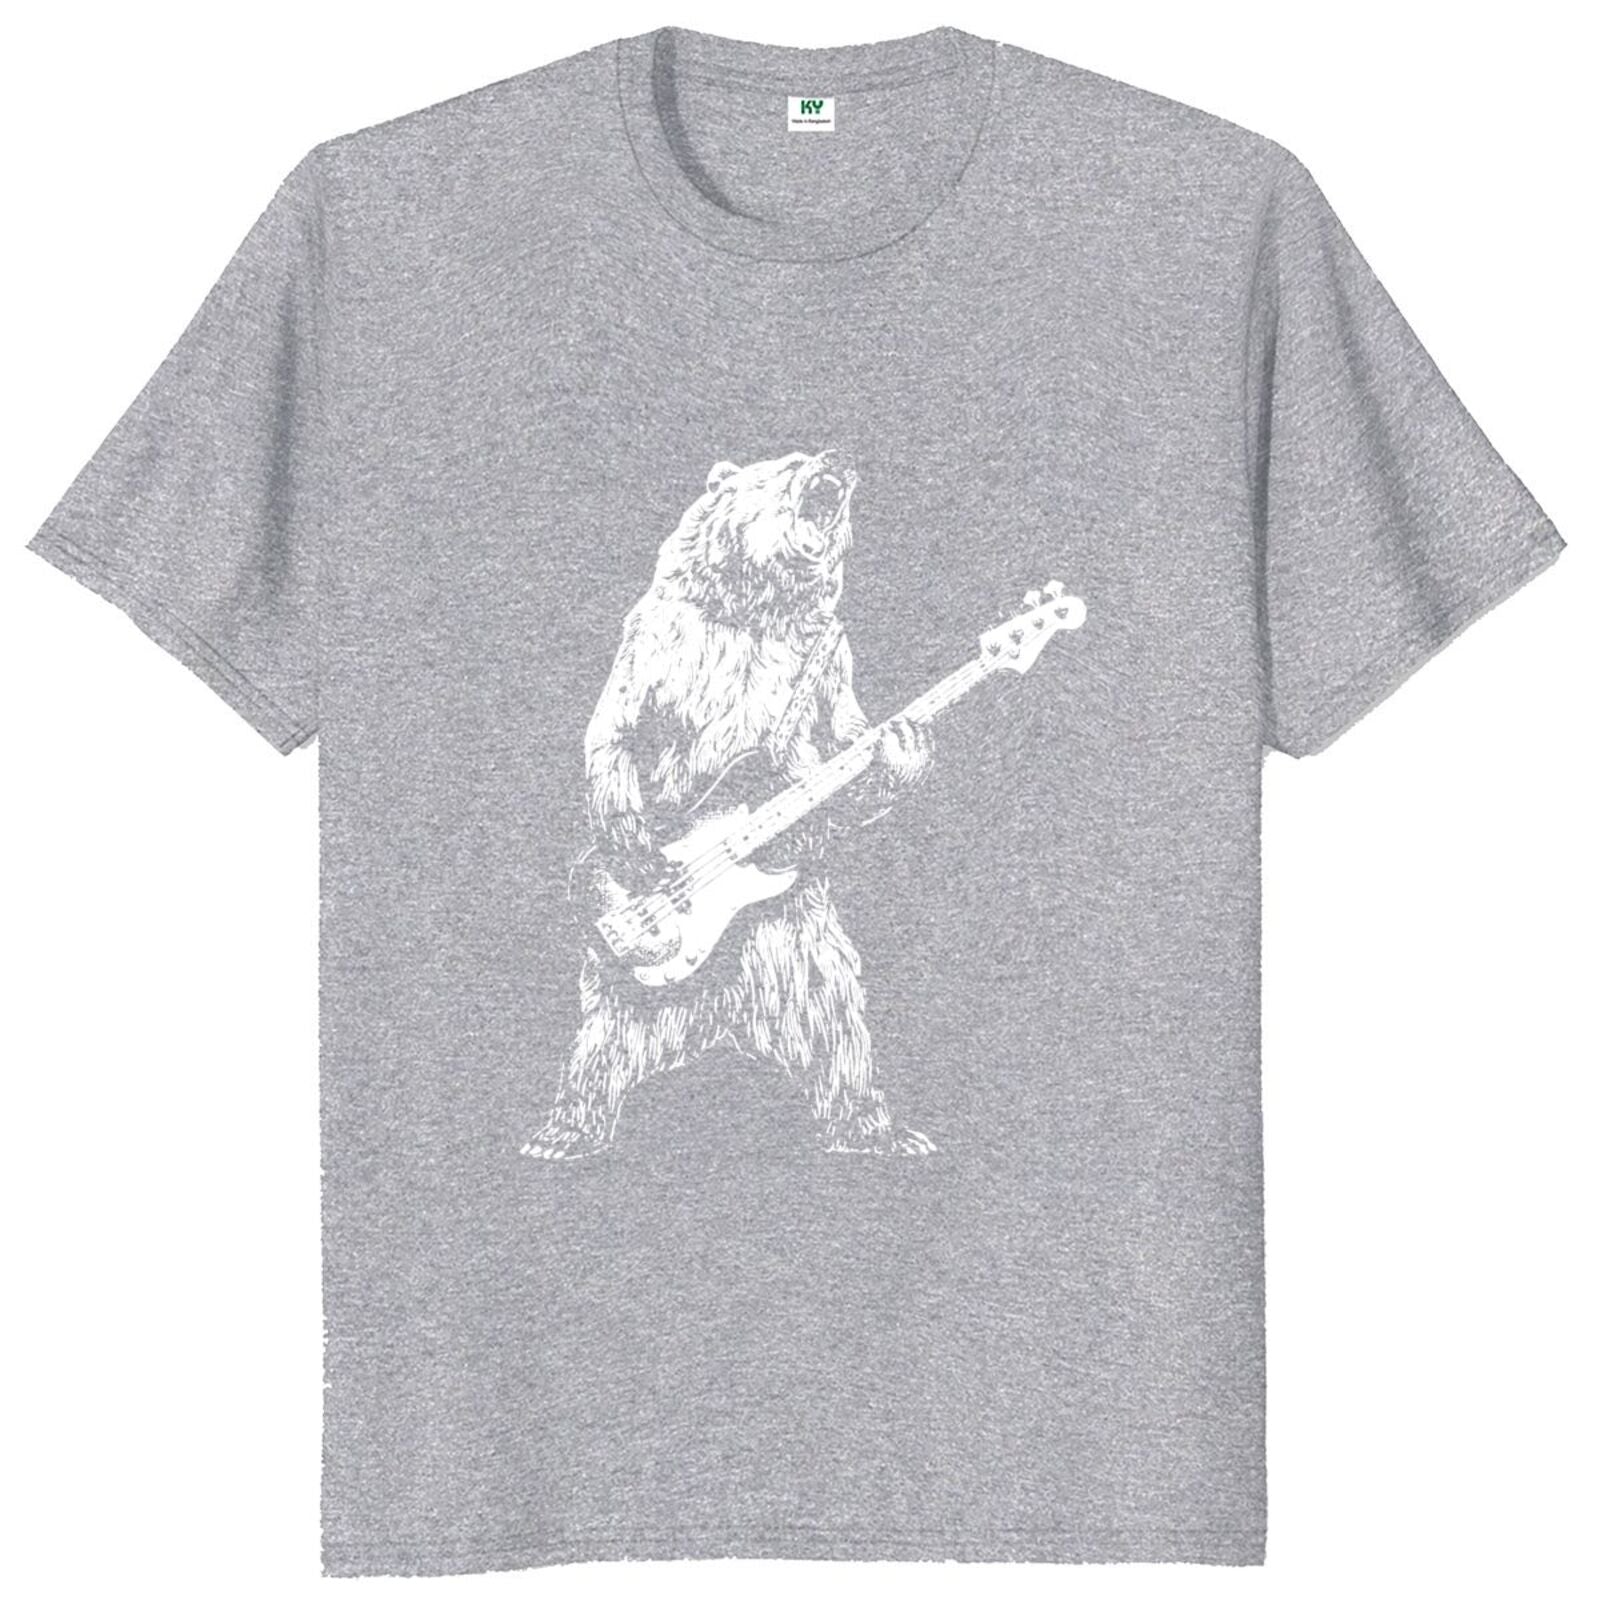 Bear Playing Guitar Tshirt